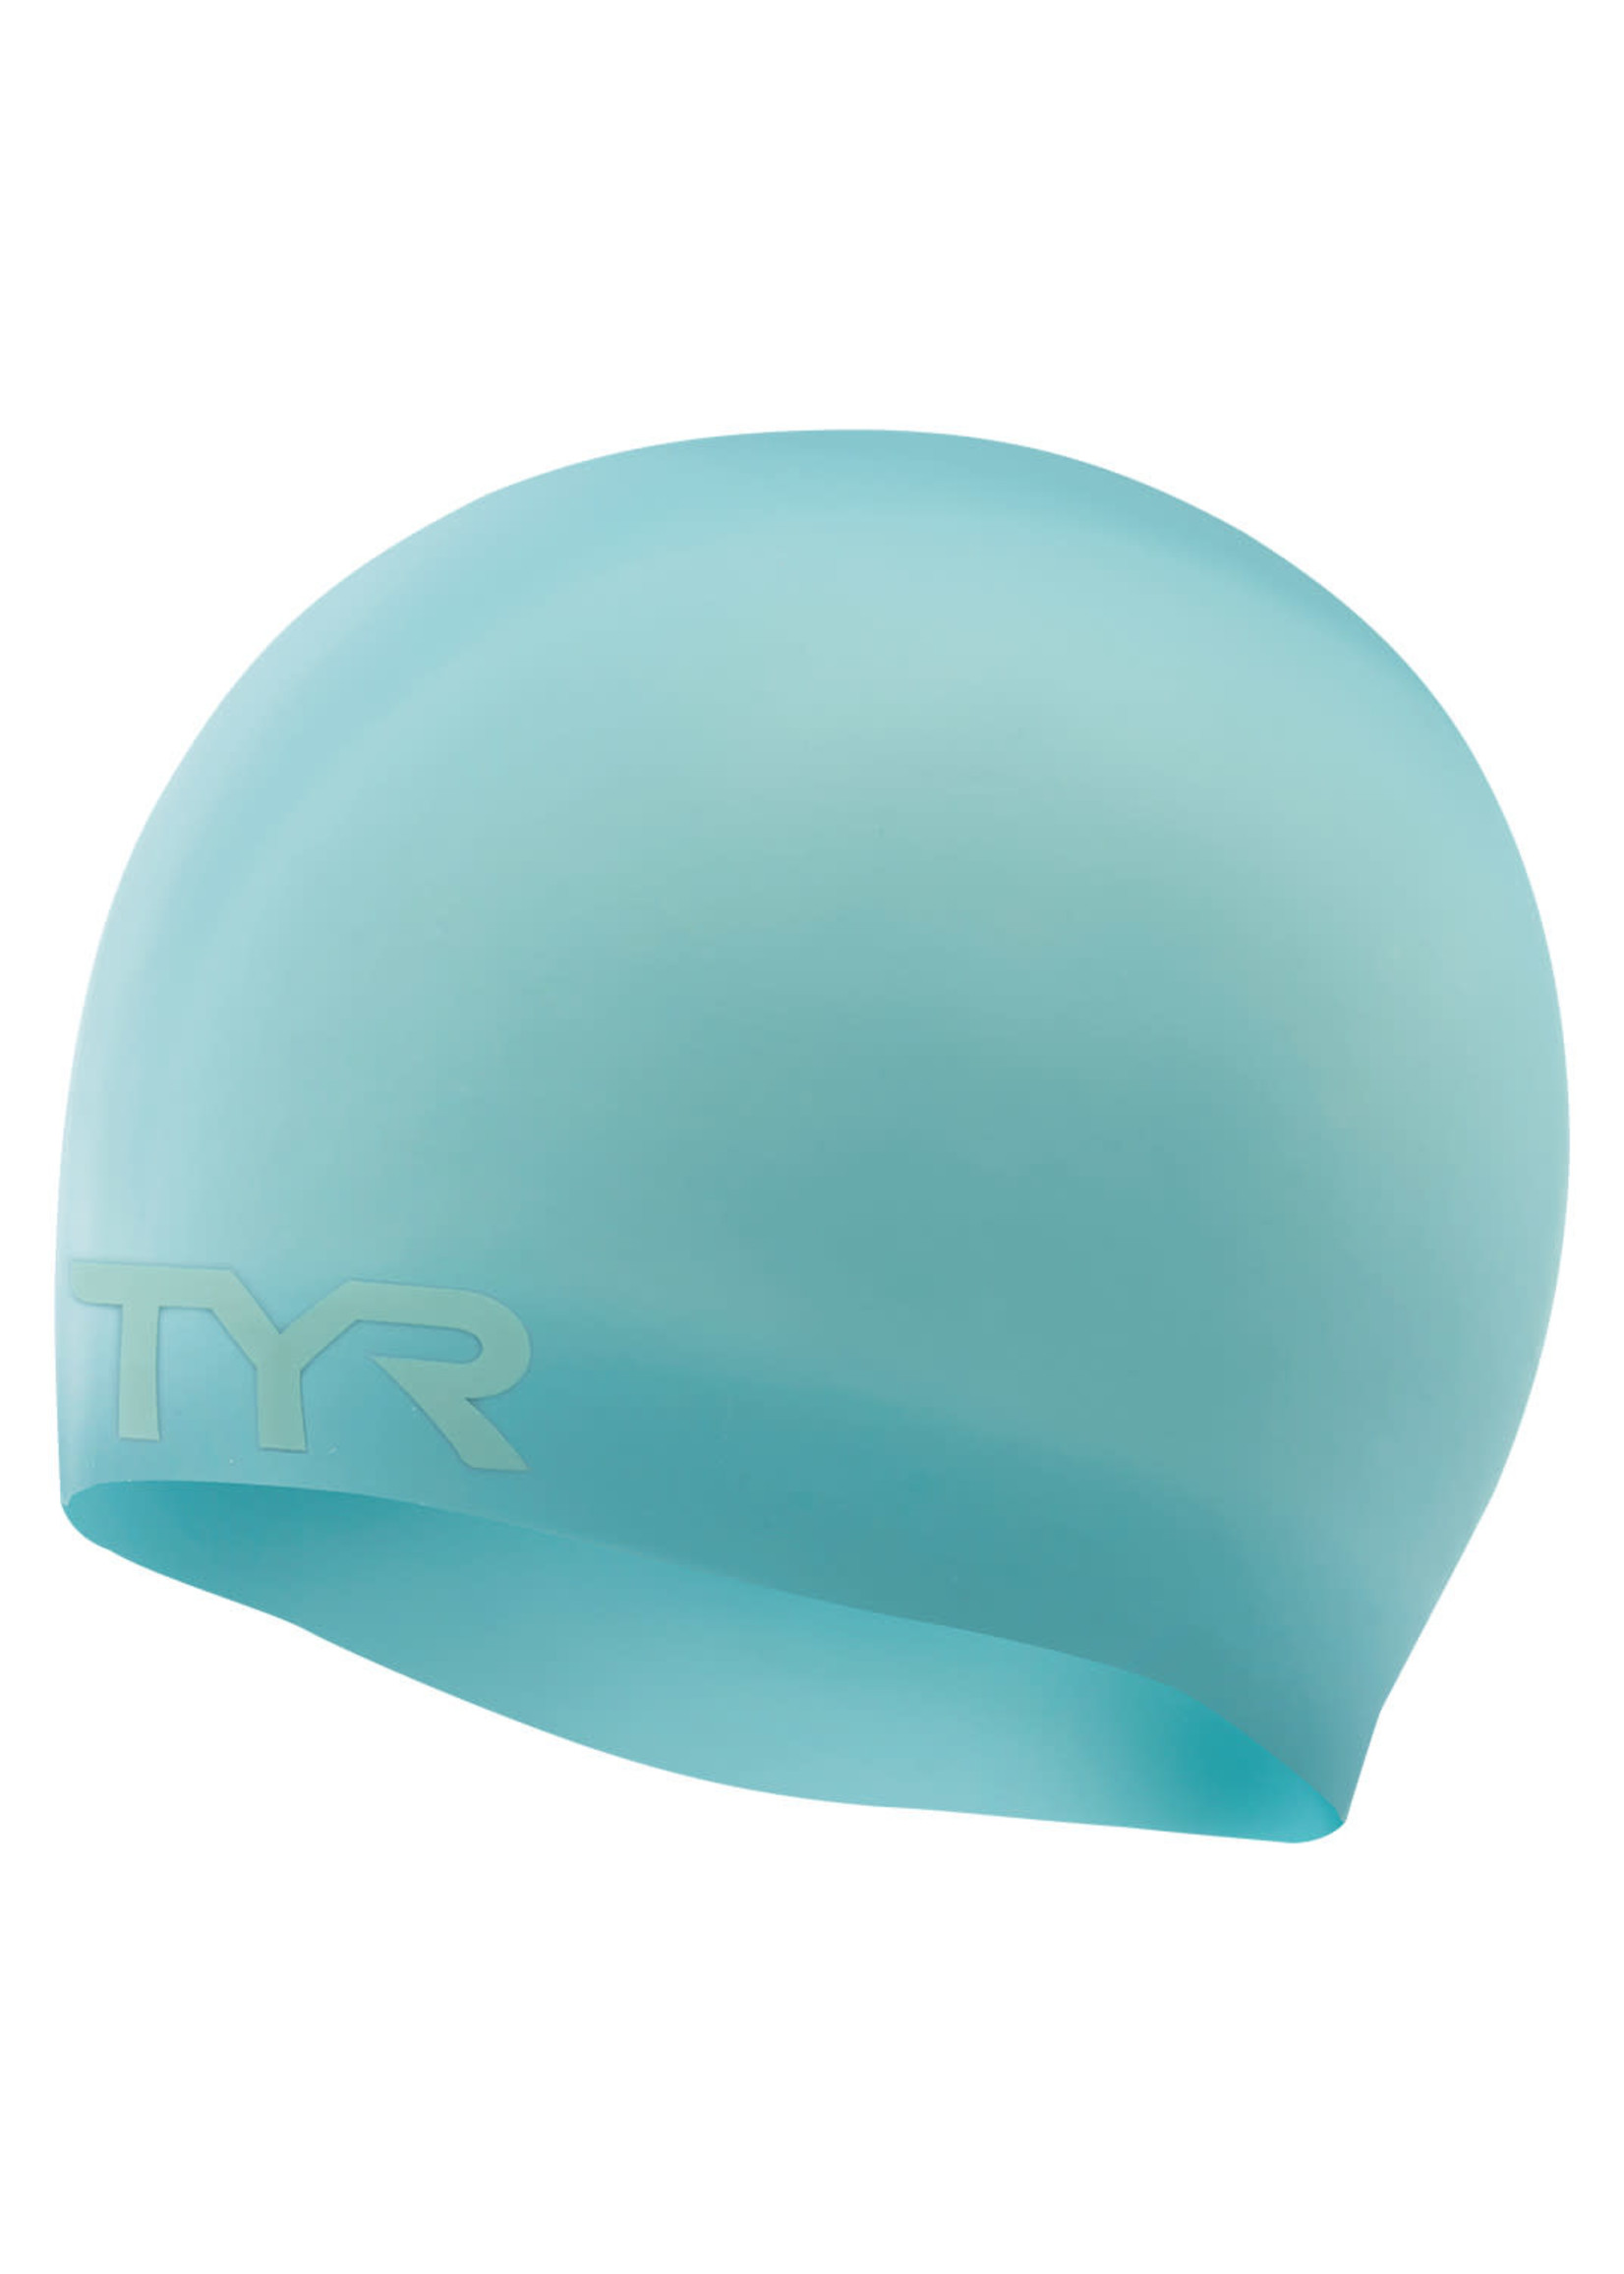 Wrinkle-Free Silicone Swim Cap